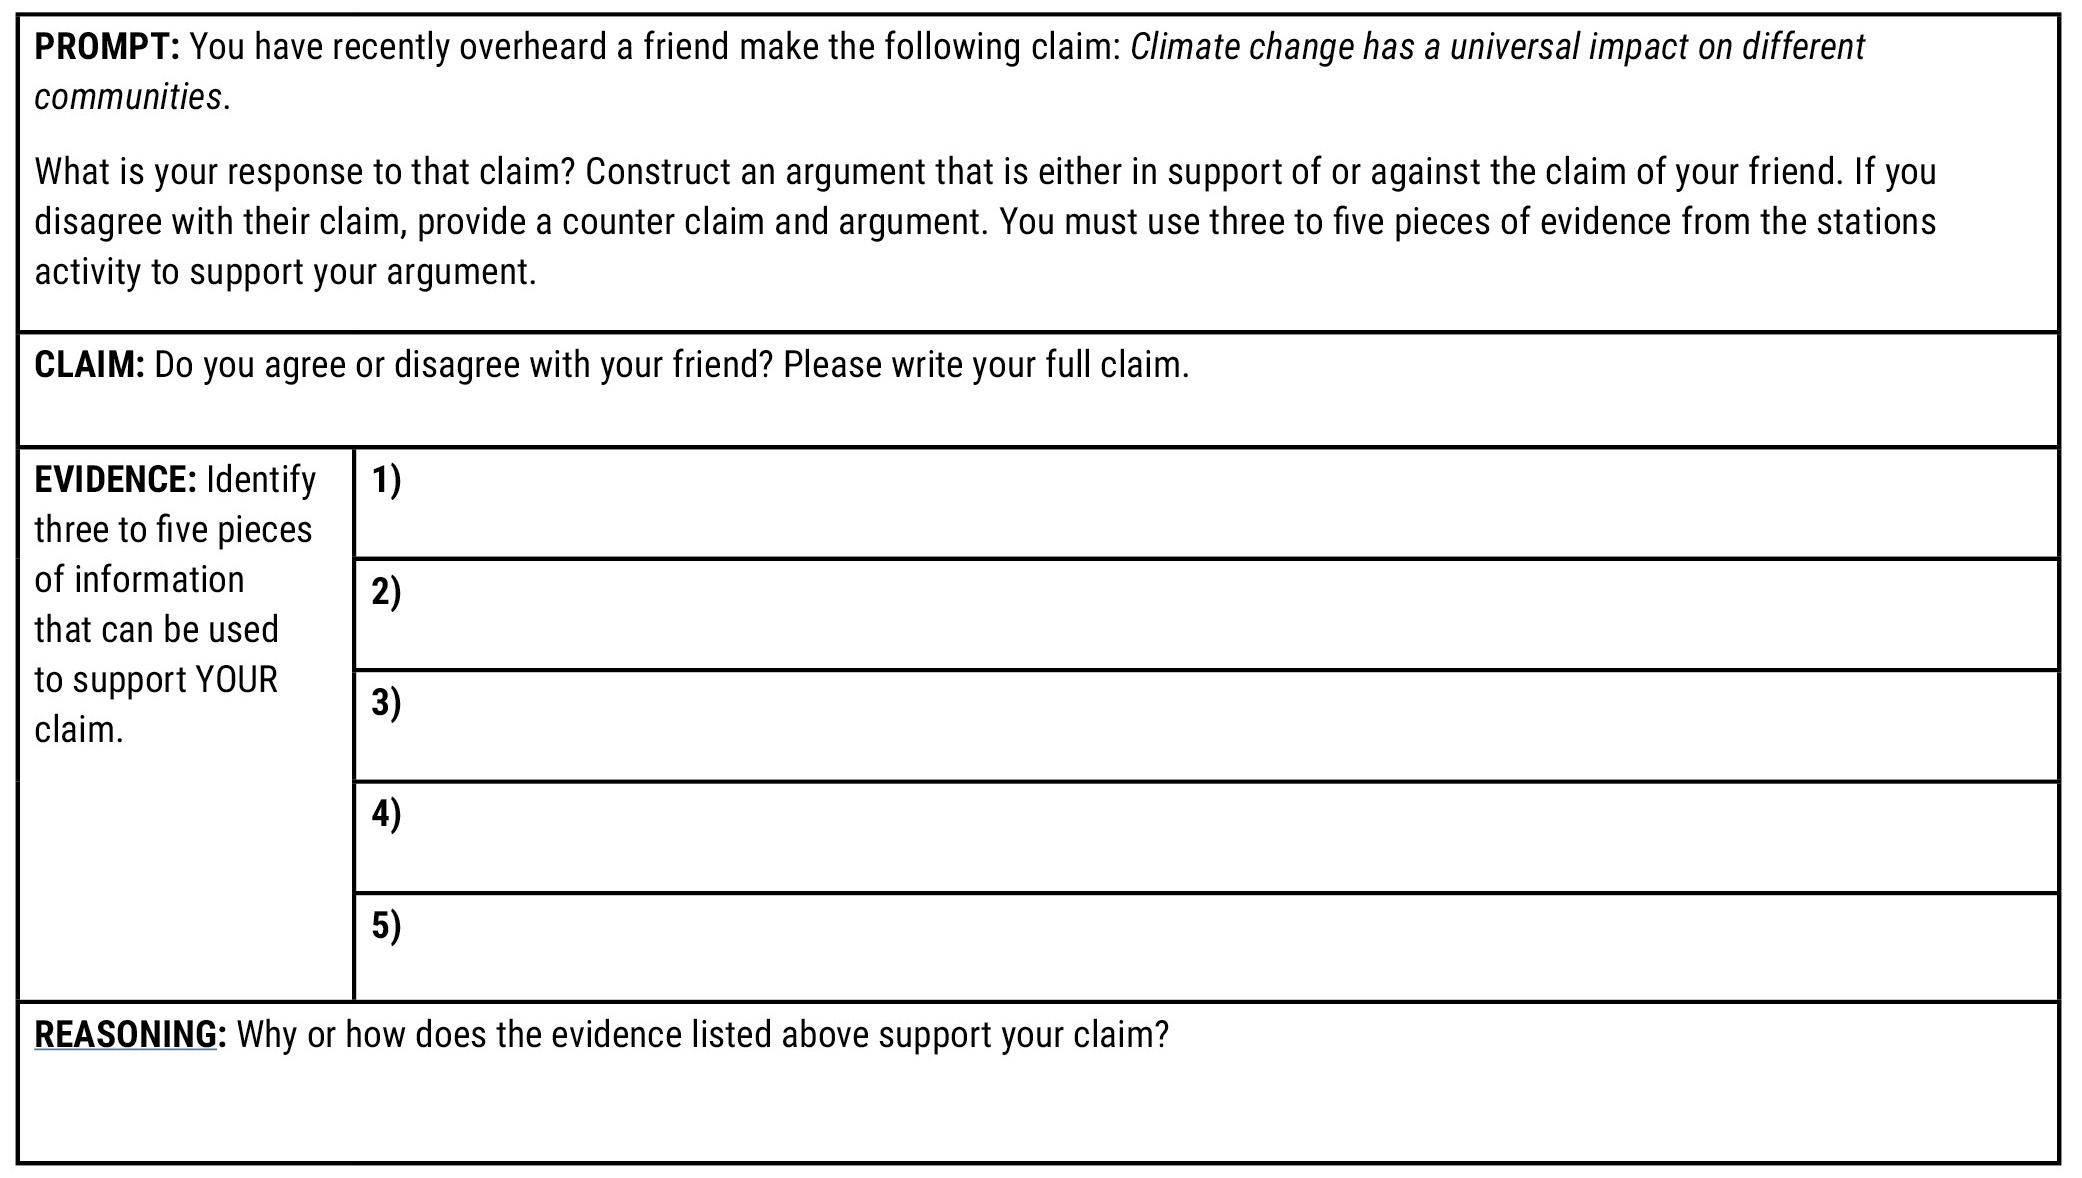 Claim-Evidence-Reasoning handout.